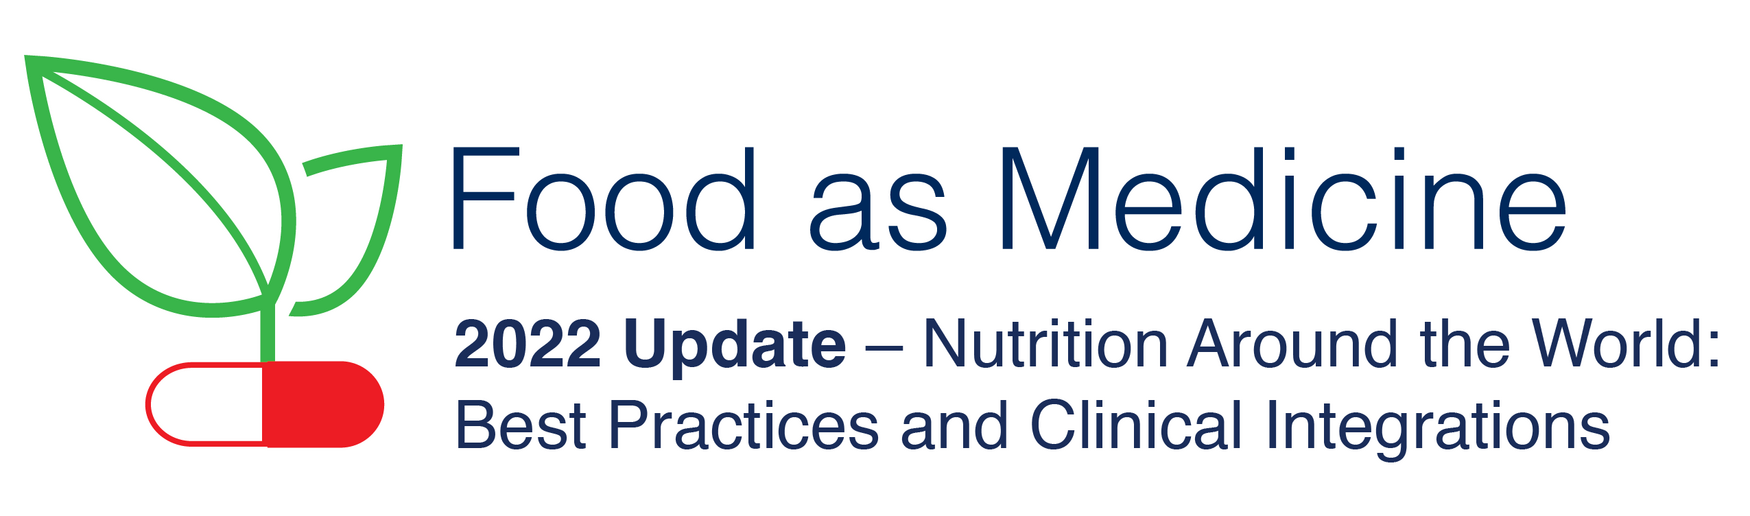 Food as Medicine 2022 Update Logo